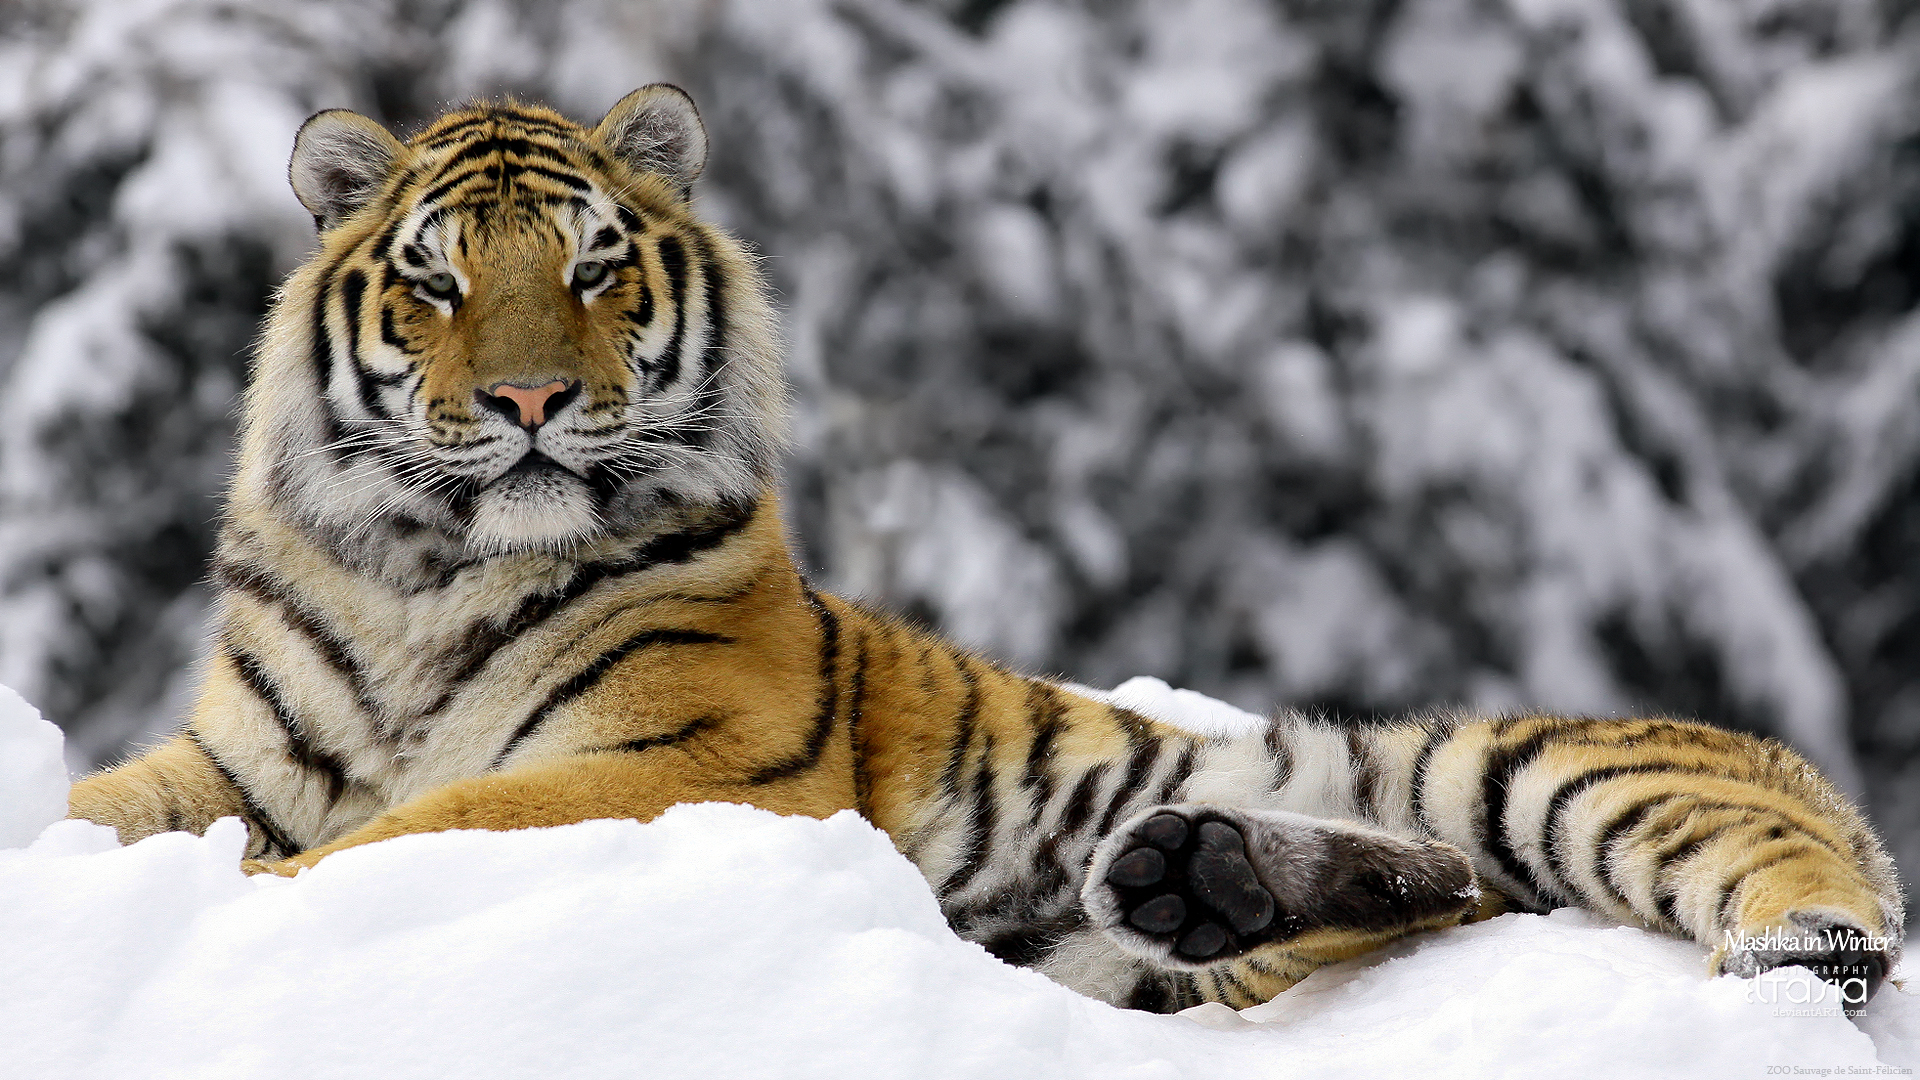 High Resolution Tiger Snow Wallpaper Full Size - SiWallpaperHD 15693